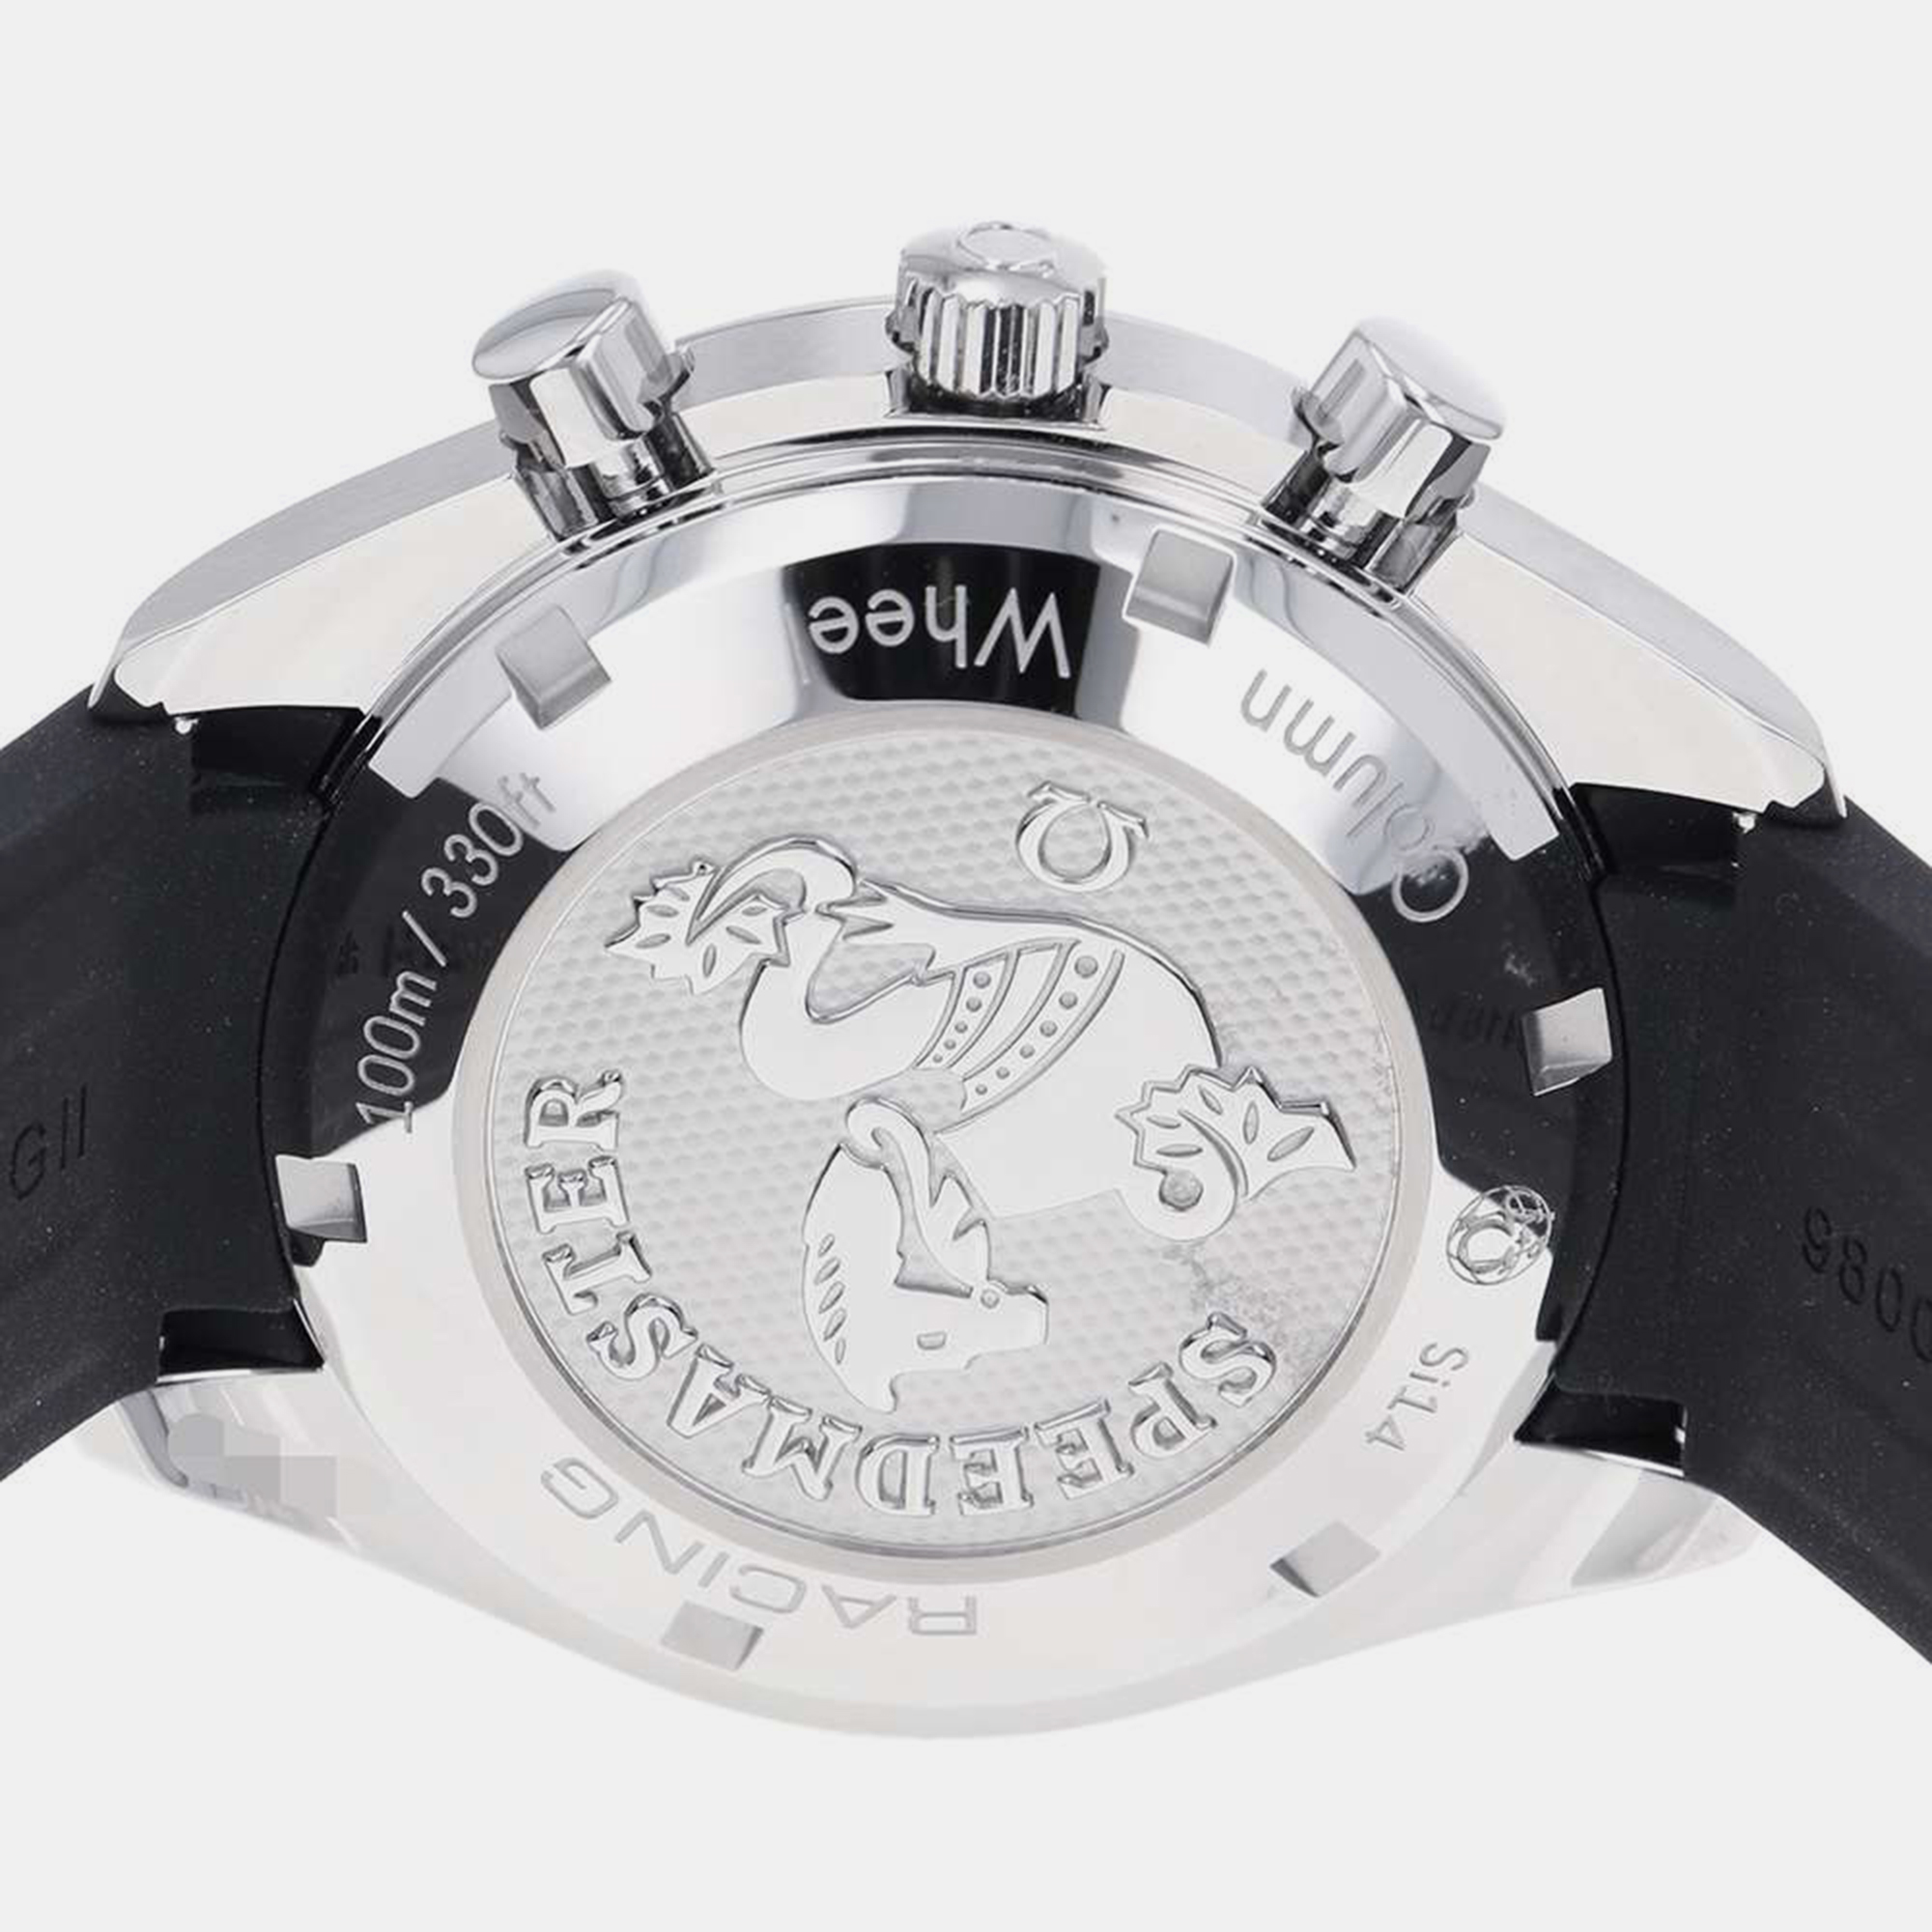 Omega Black Stainless Steel Speedmaster 326.32.40.50.01.001 Automatic Men's Wristwatch 40 Mm